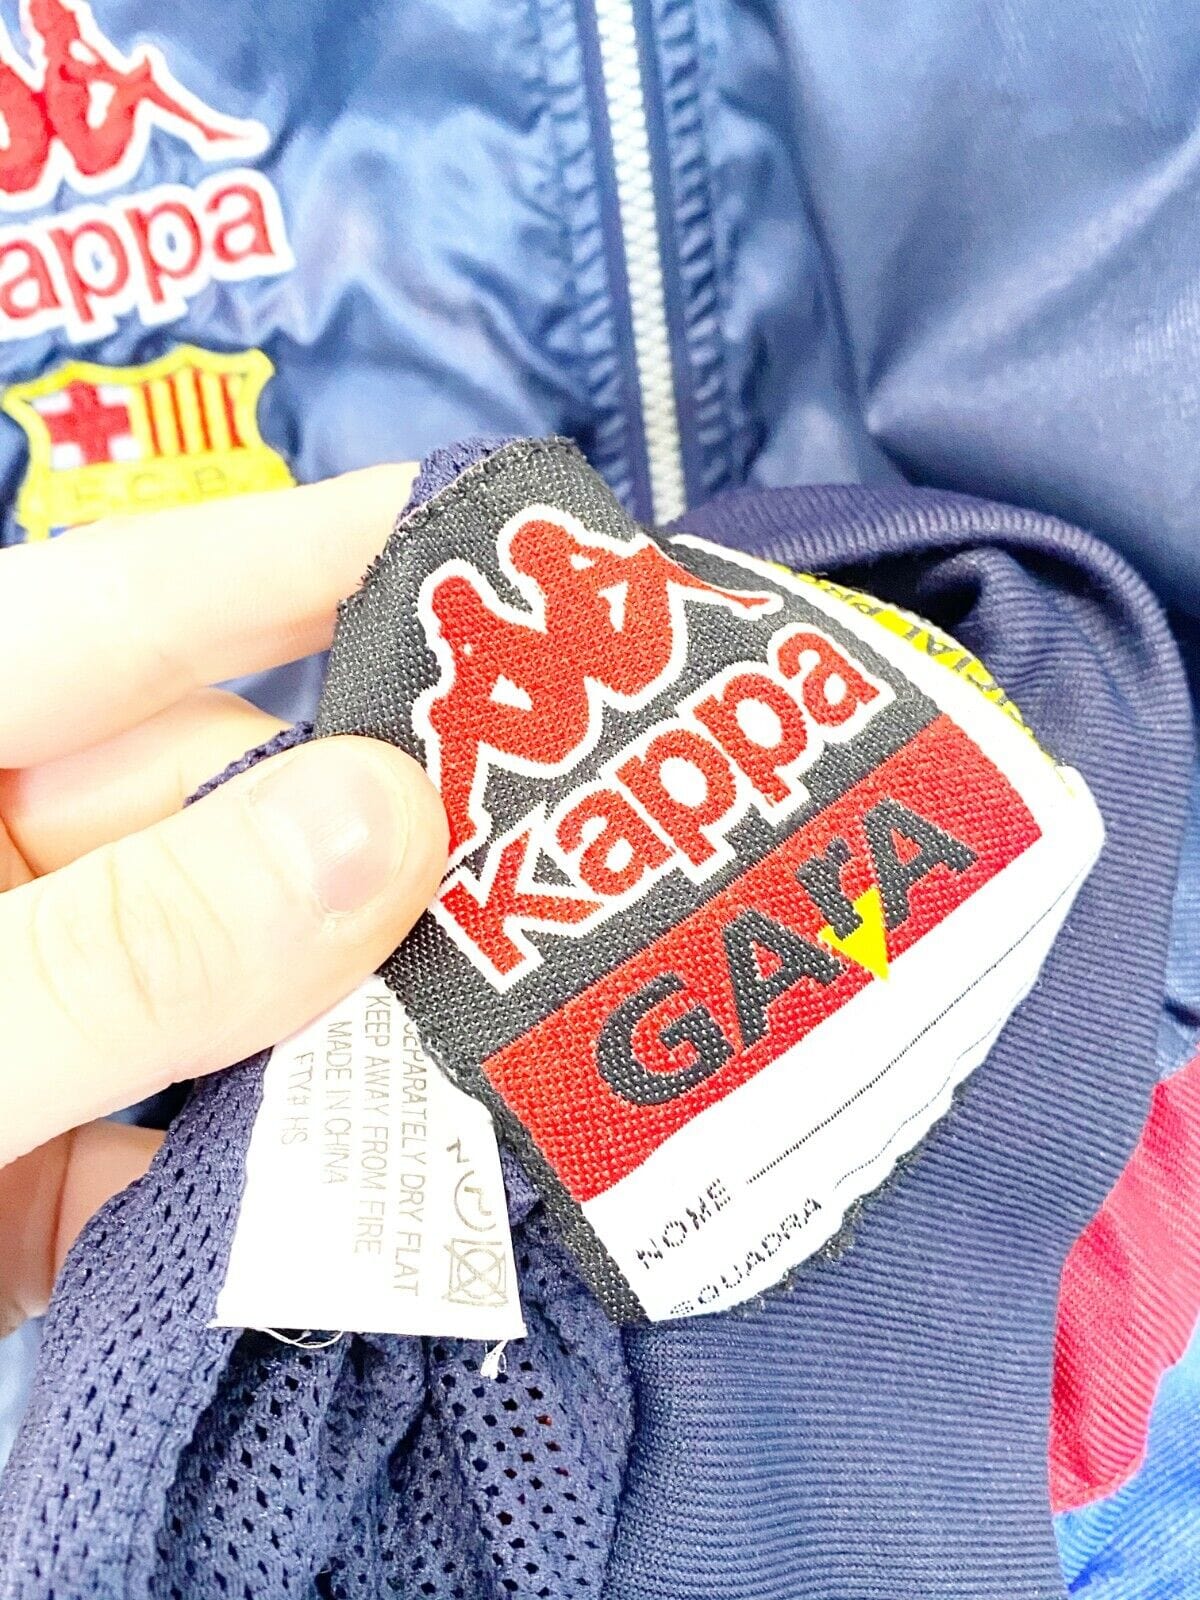 1995/97 BARCELONA Vintage Kappa Track Top Football Jacket (XL) Ronaldo Era